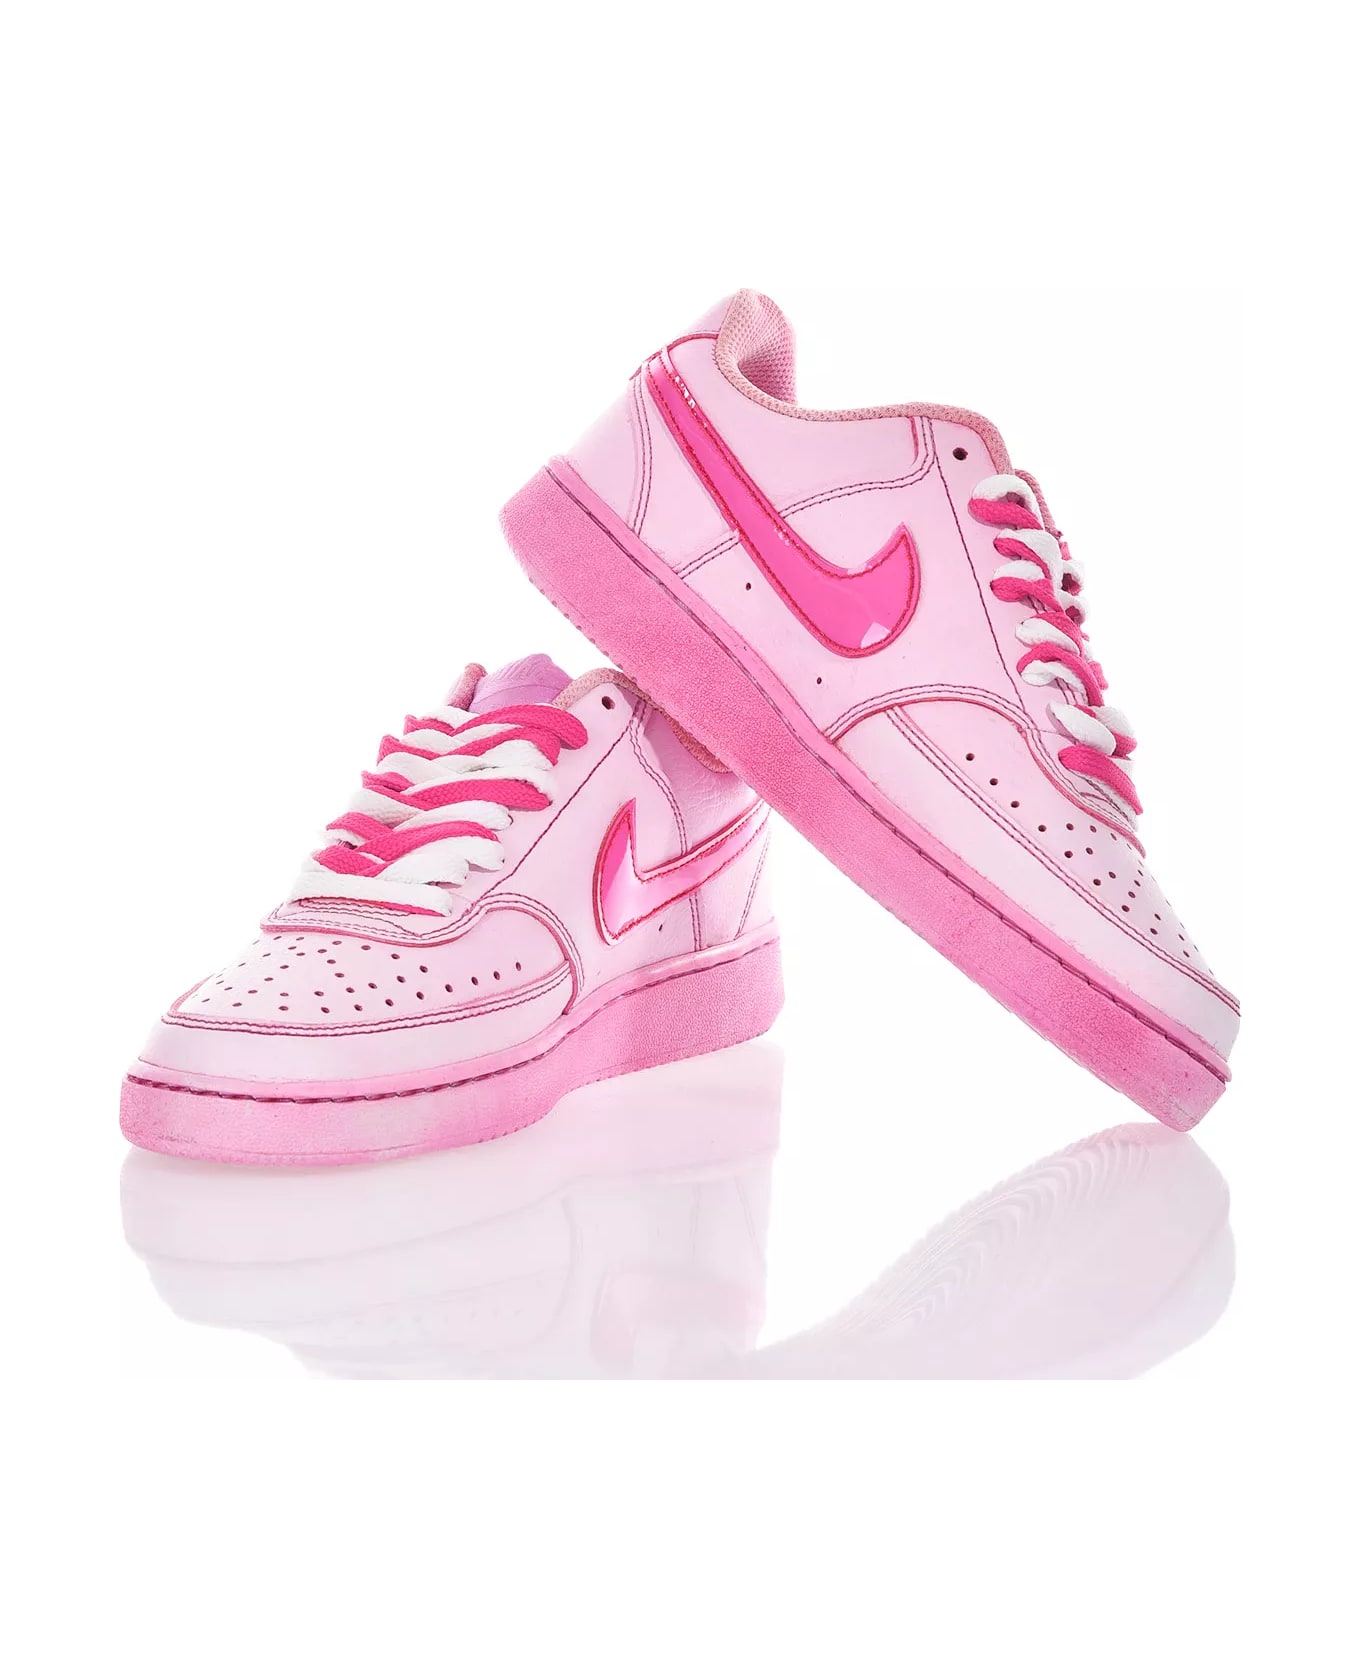 Mimanera Nike Pink Shoes: Mimanerashop.com